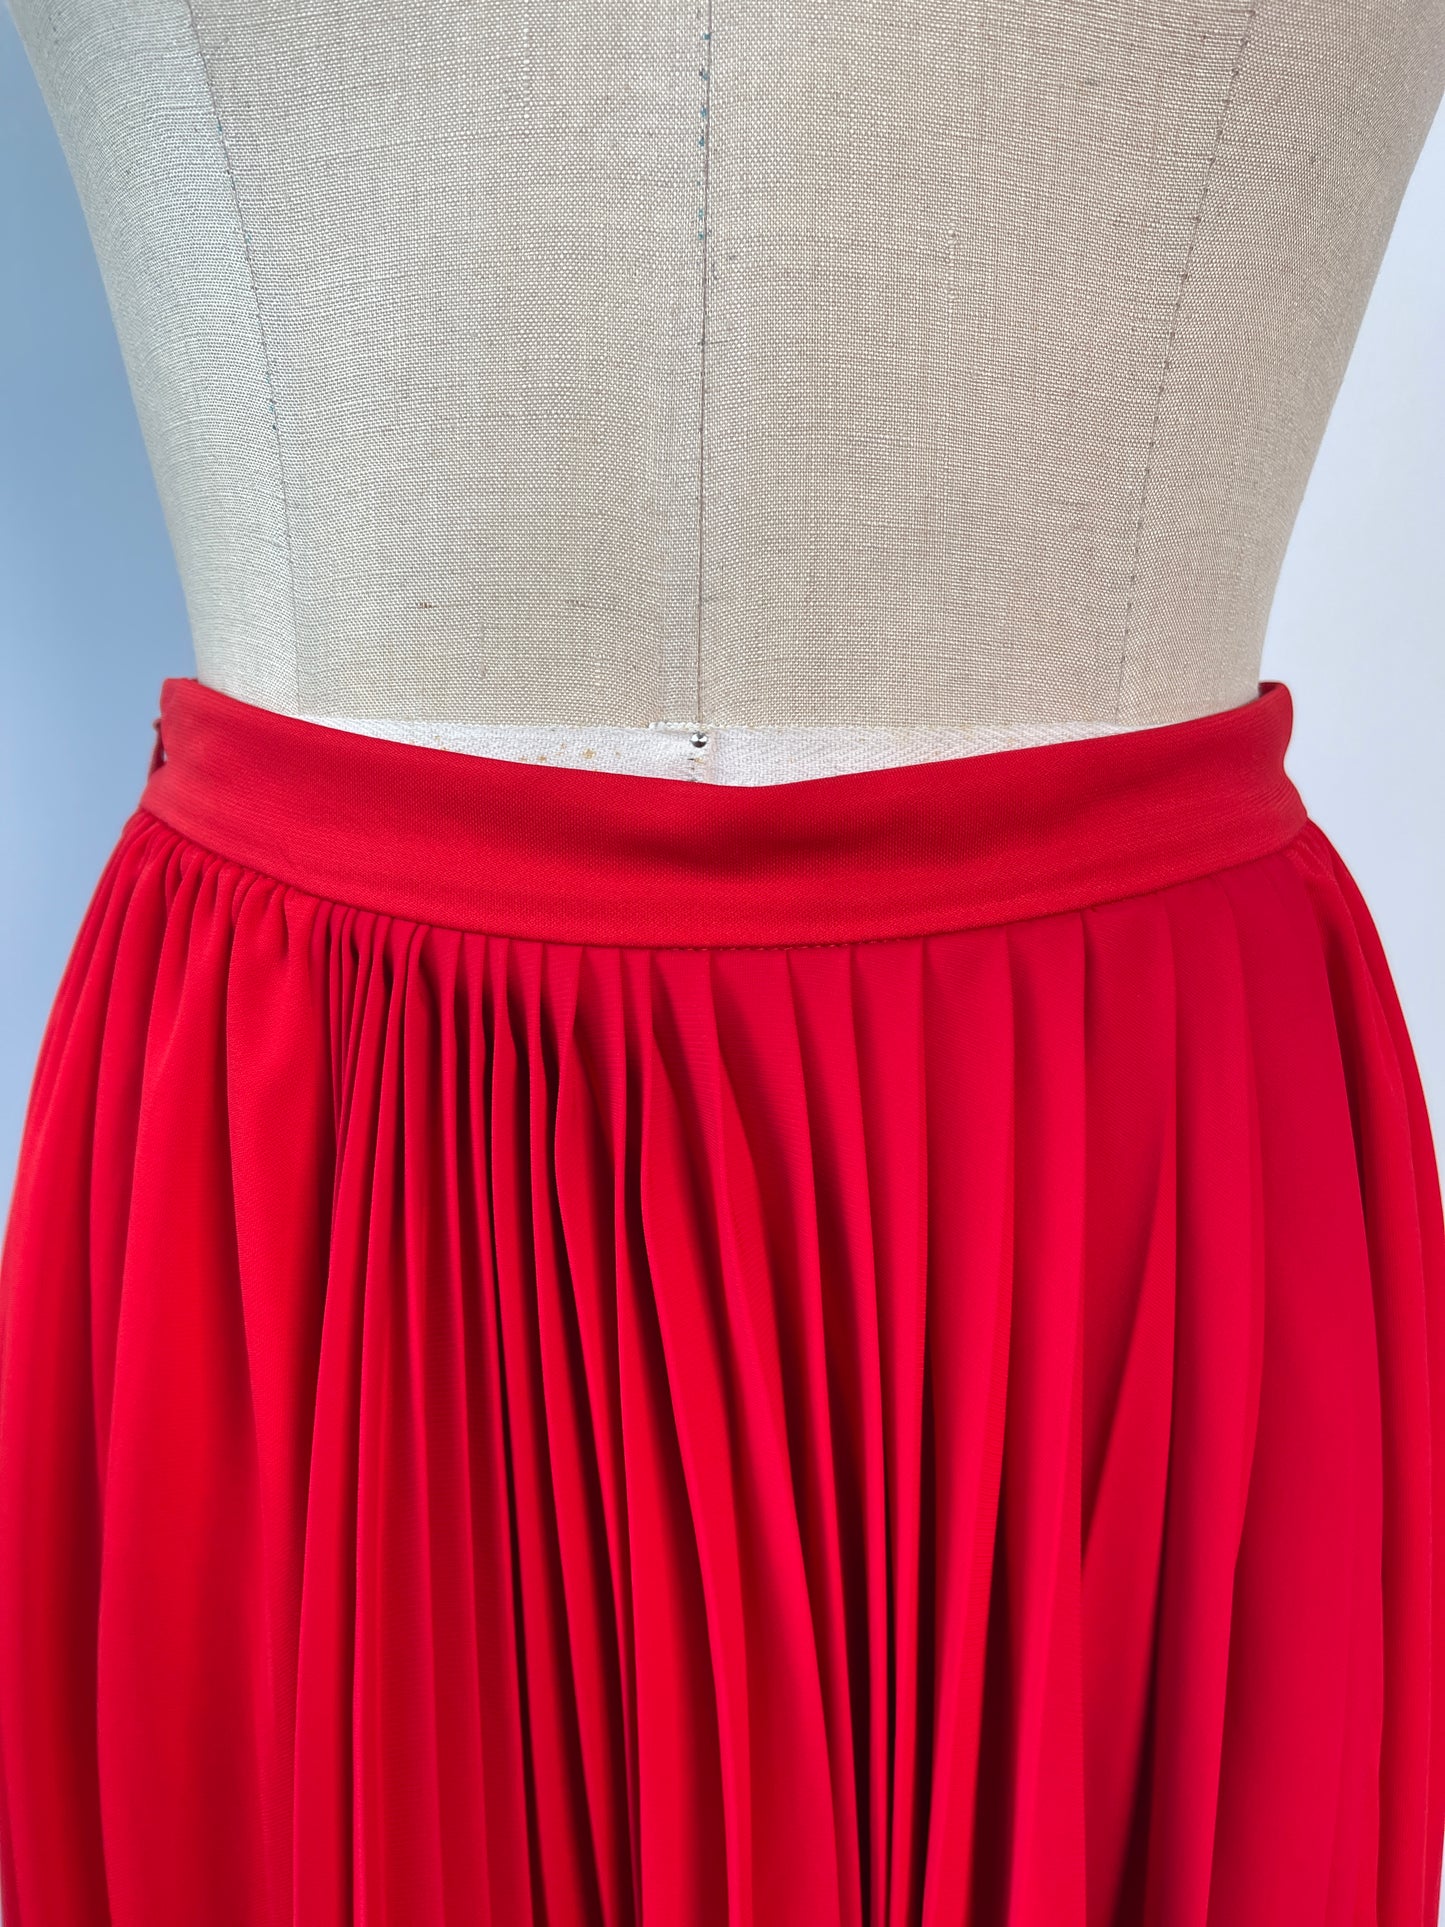 Fabuleuse jupe plissée rouge luxueuse (S)